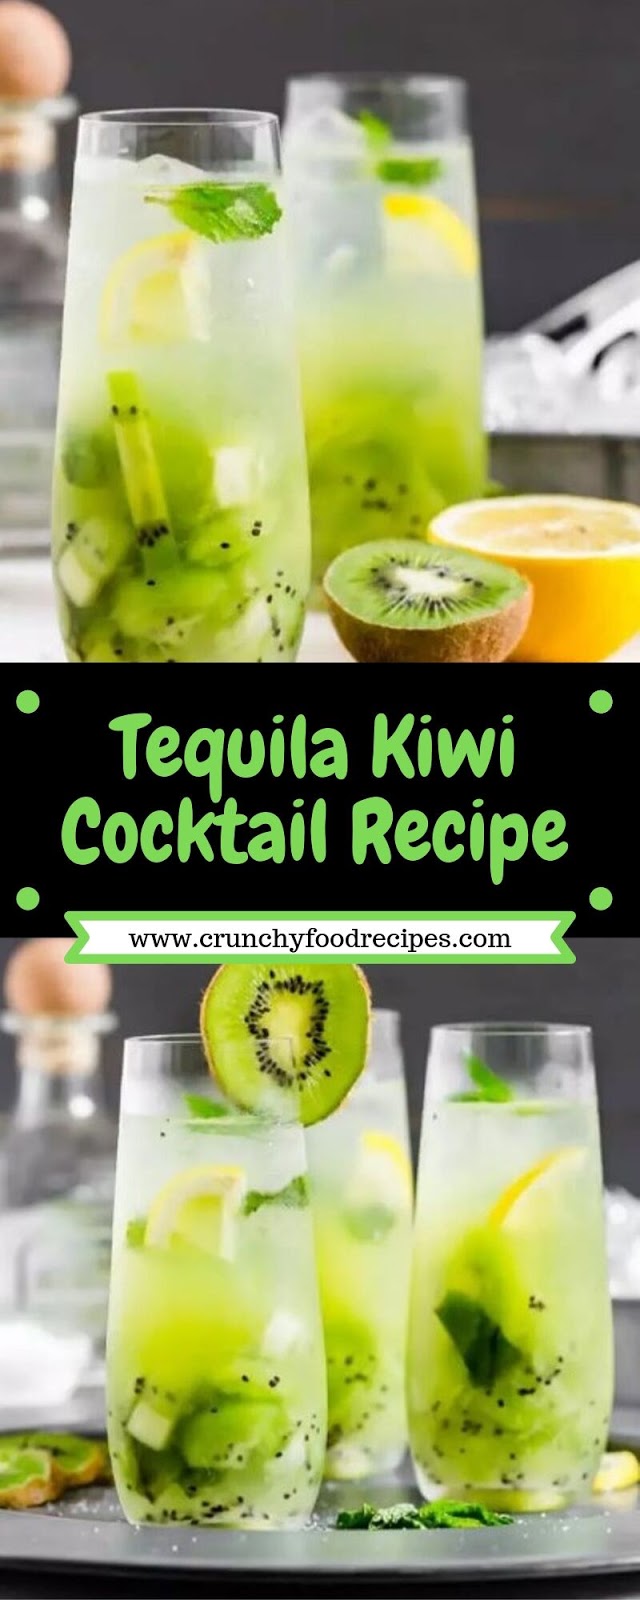 Tequila Kiwi Cocktail Recipe